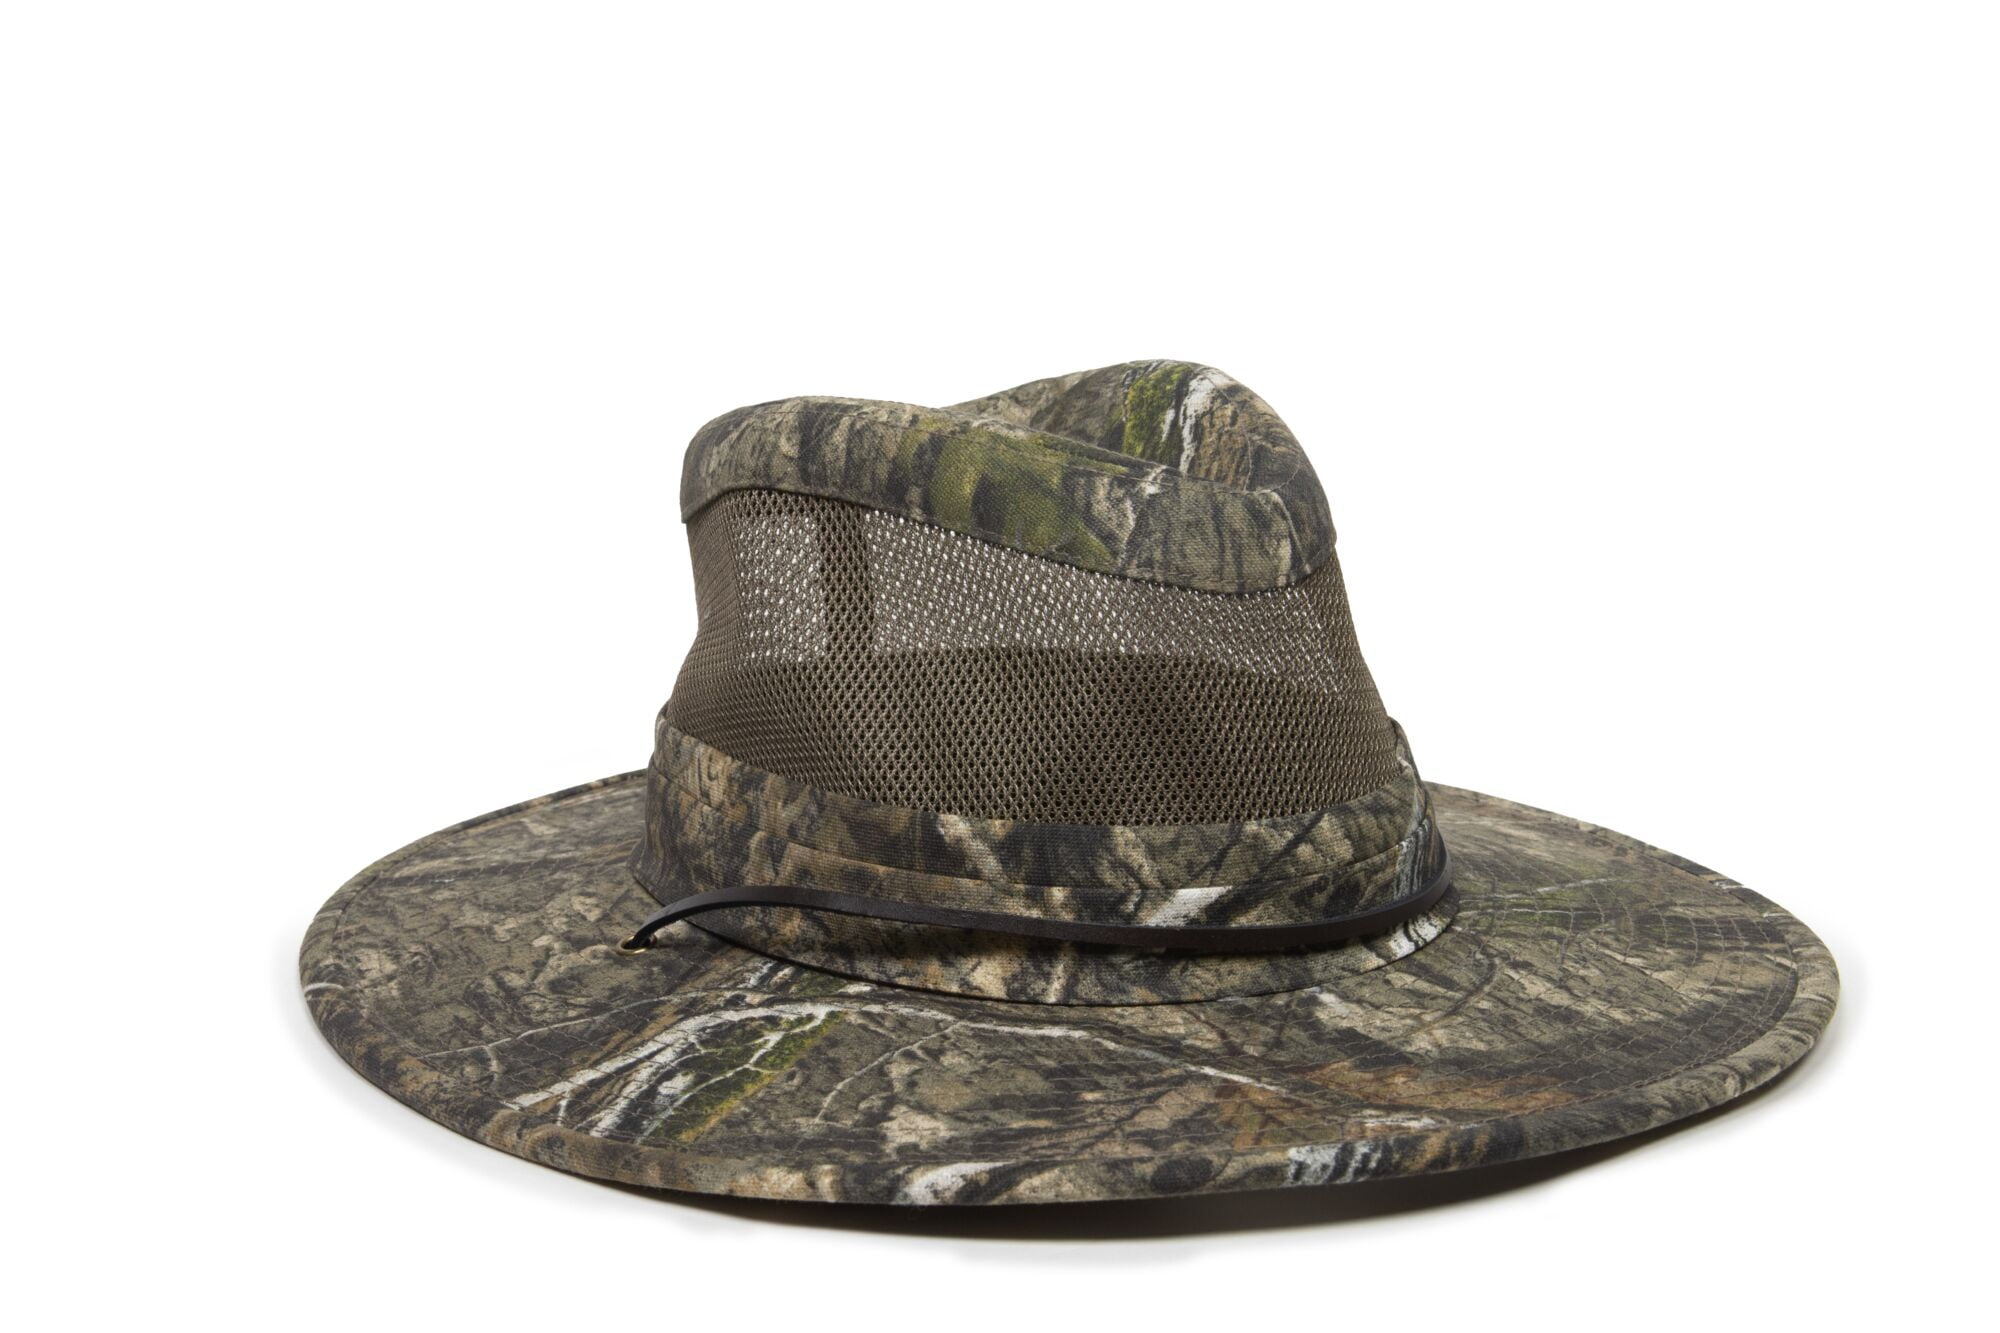 Mossy Oak Flat Brim Safari Hat, Country DNA Camo, Adult